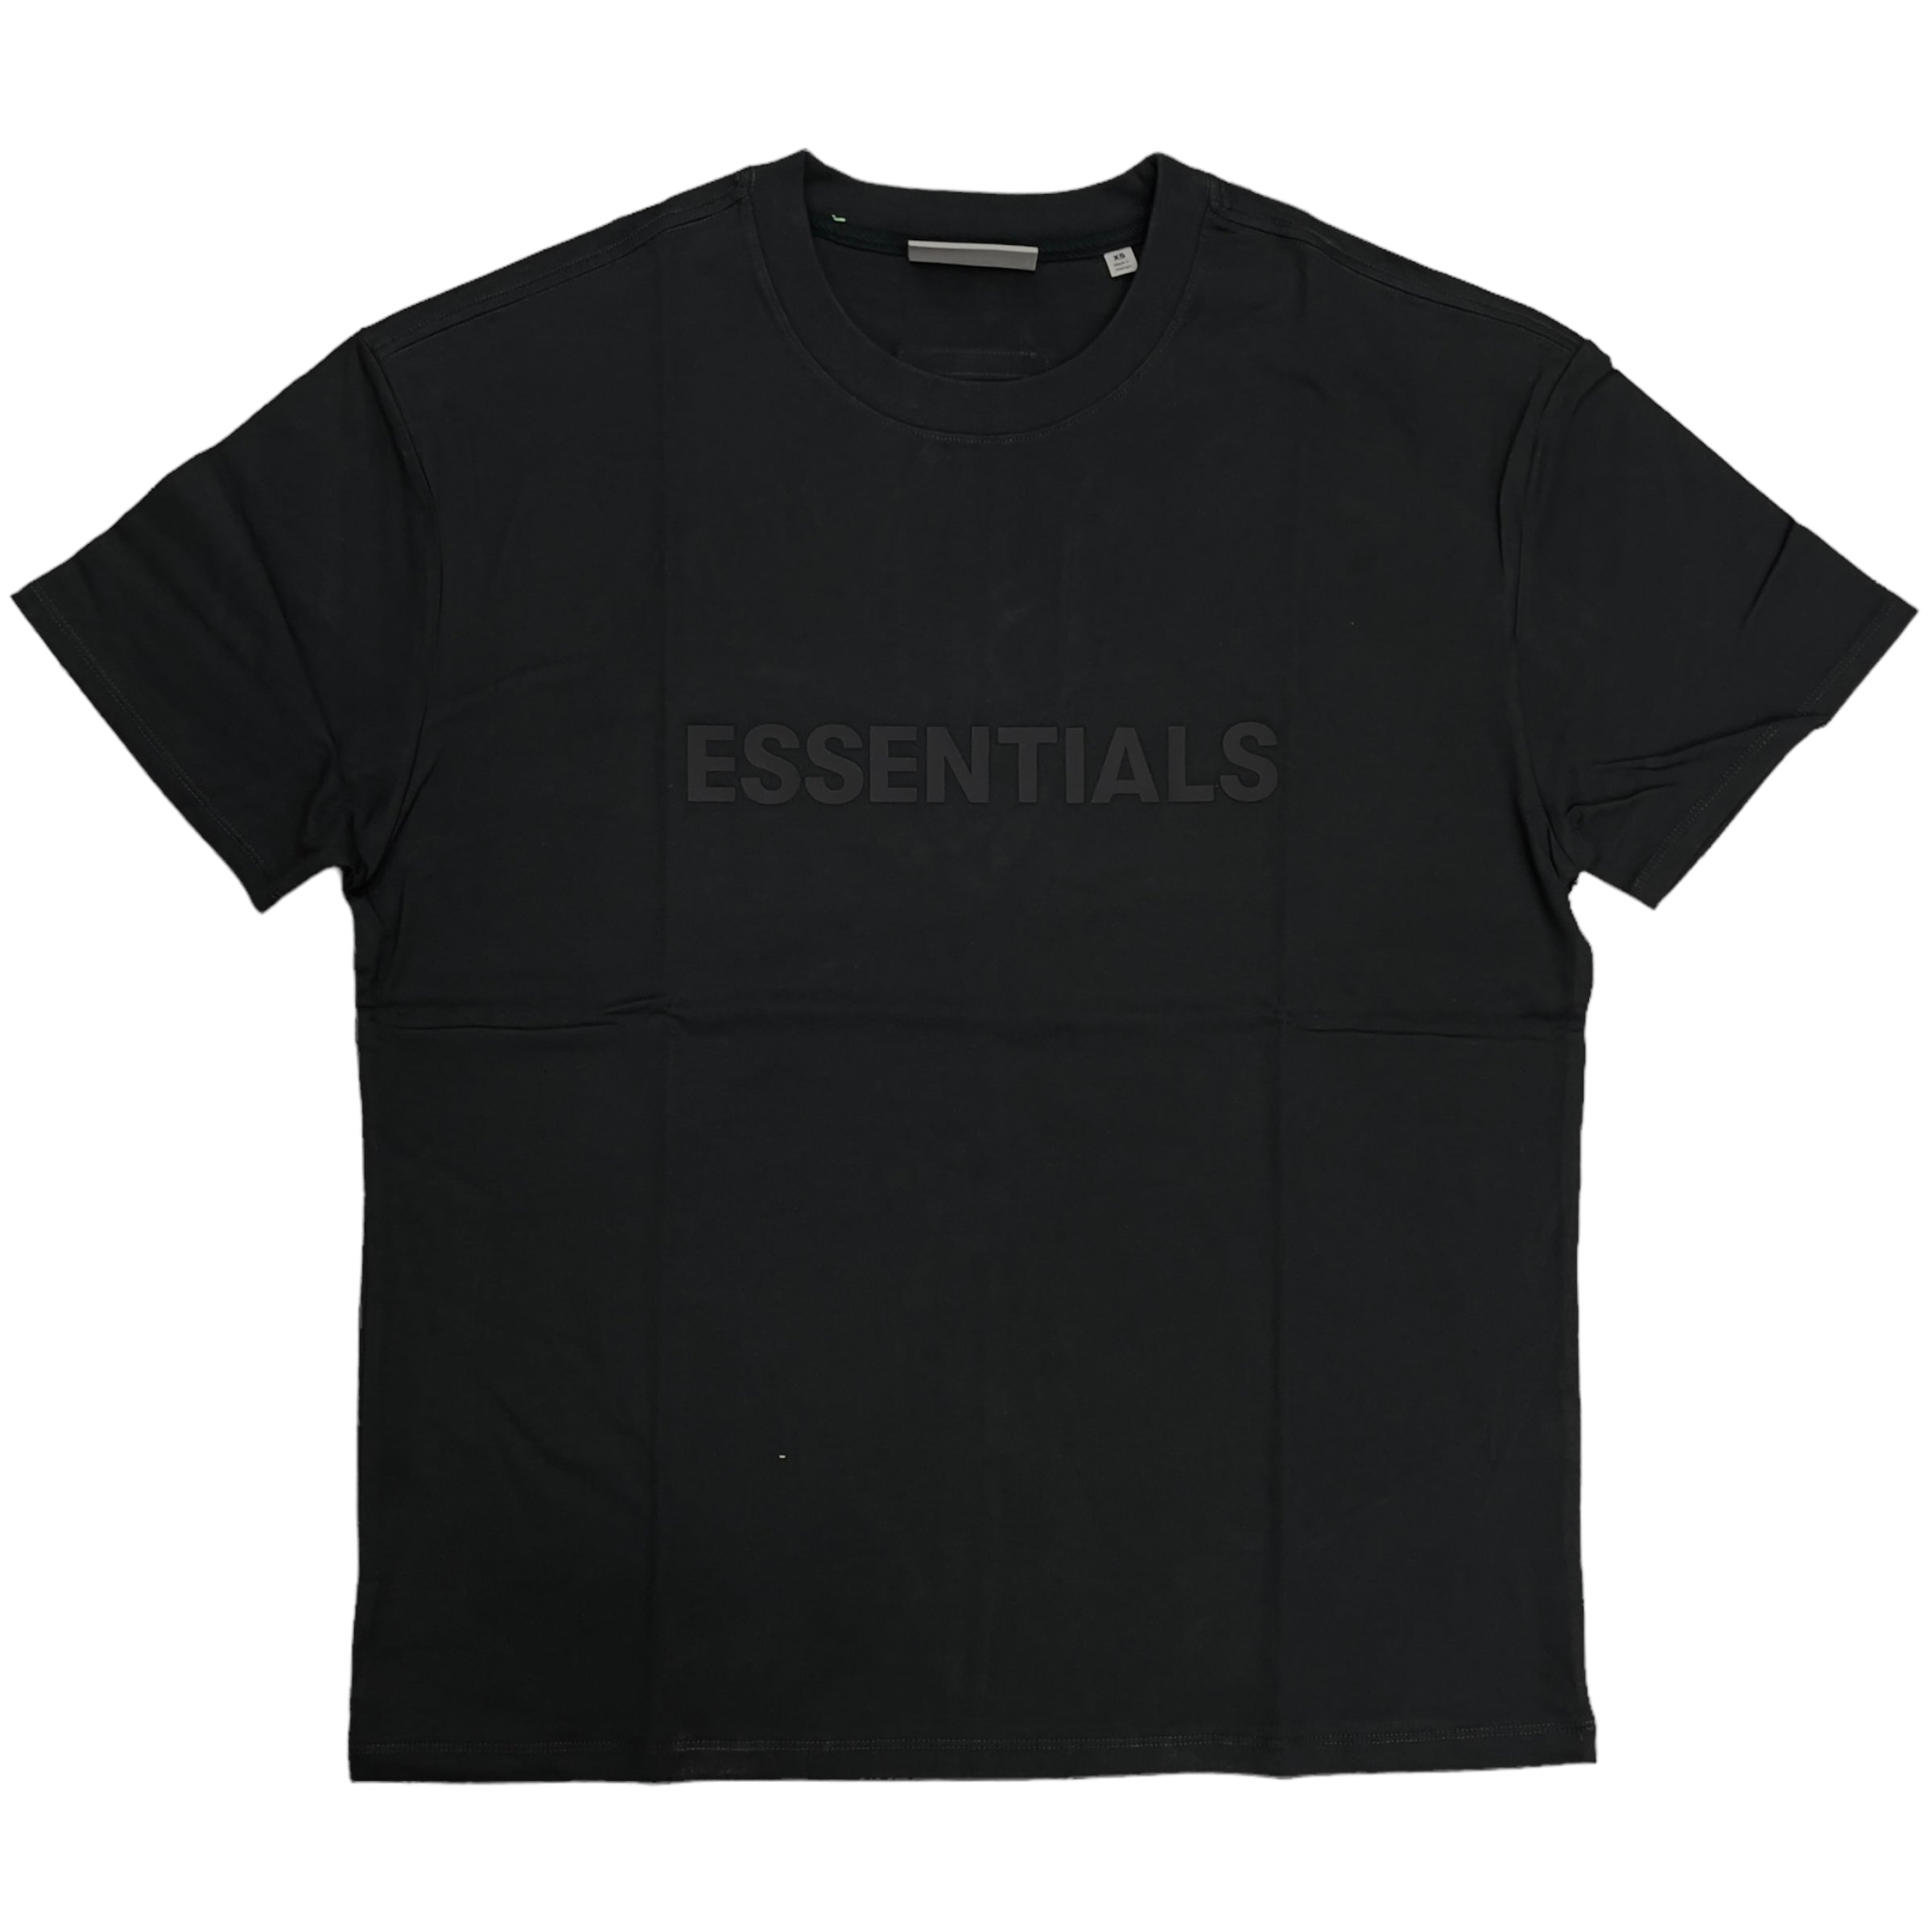 Essentials "Fear Of God" 2 Black T-Shirt